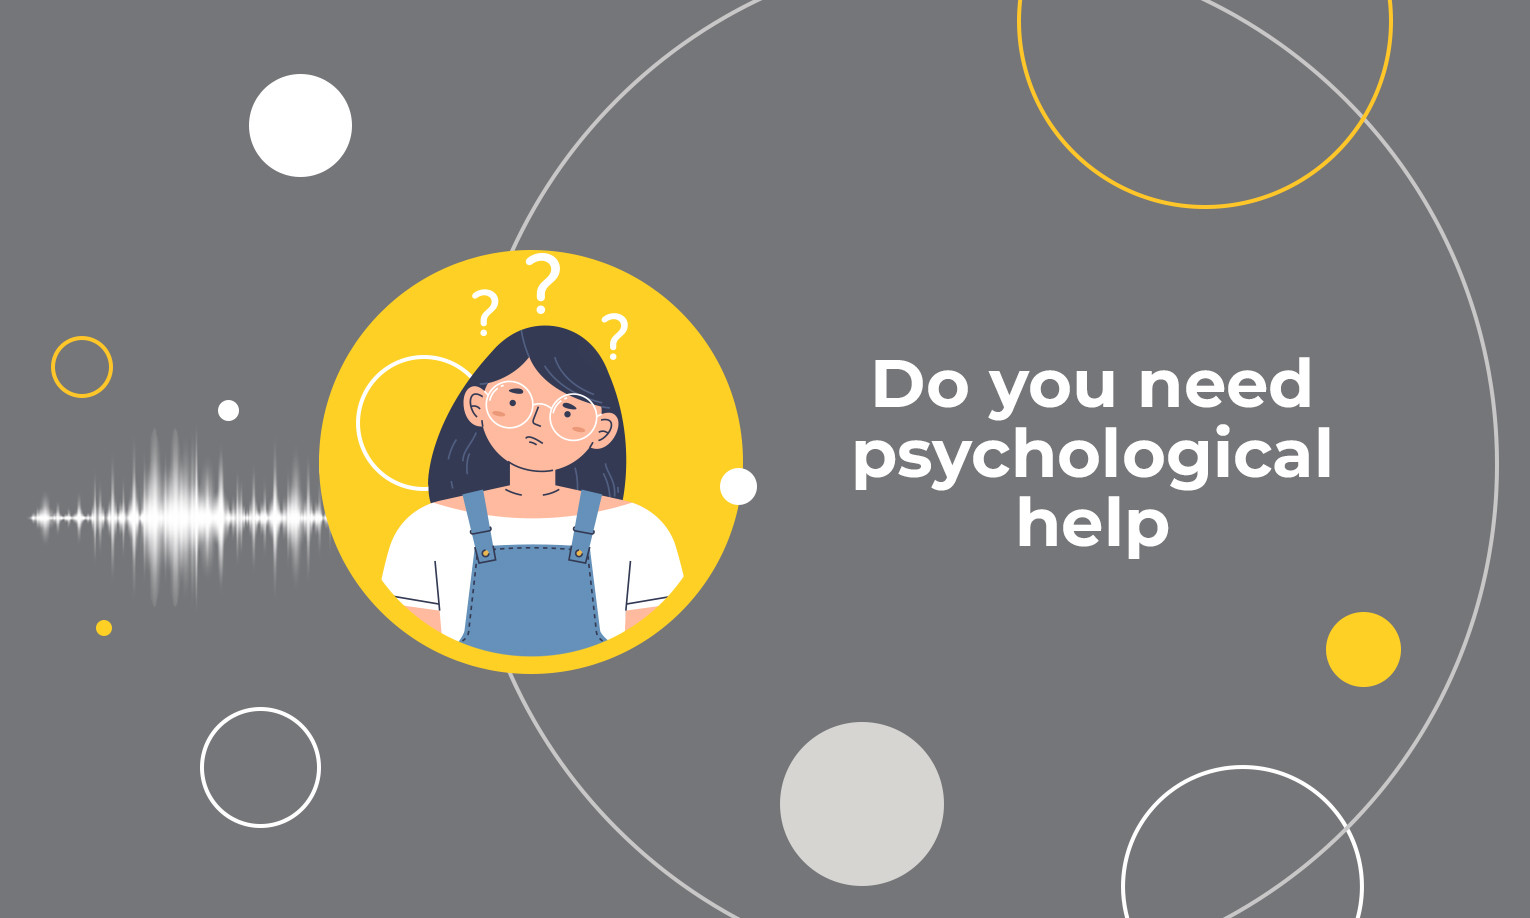 Do you need psychological help?